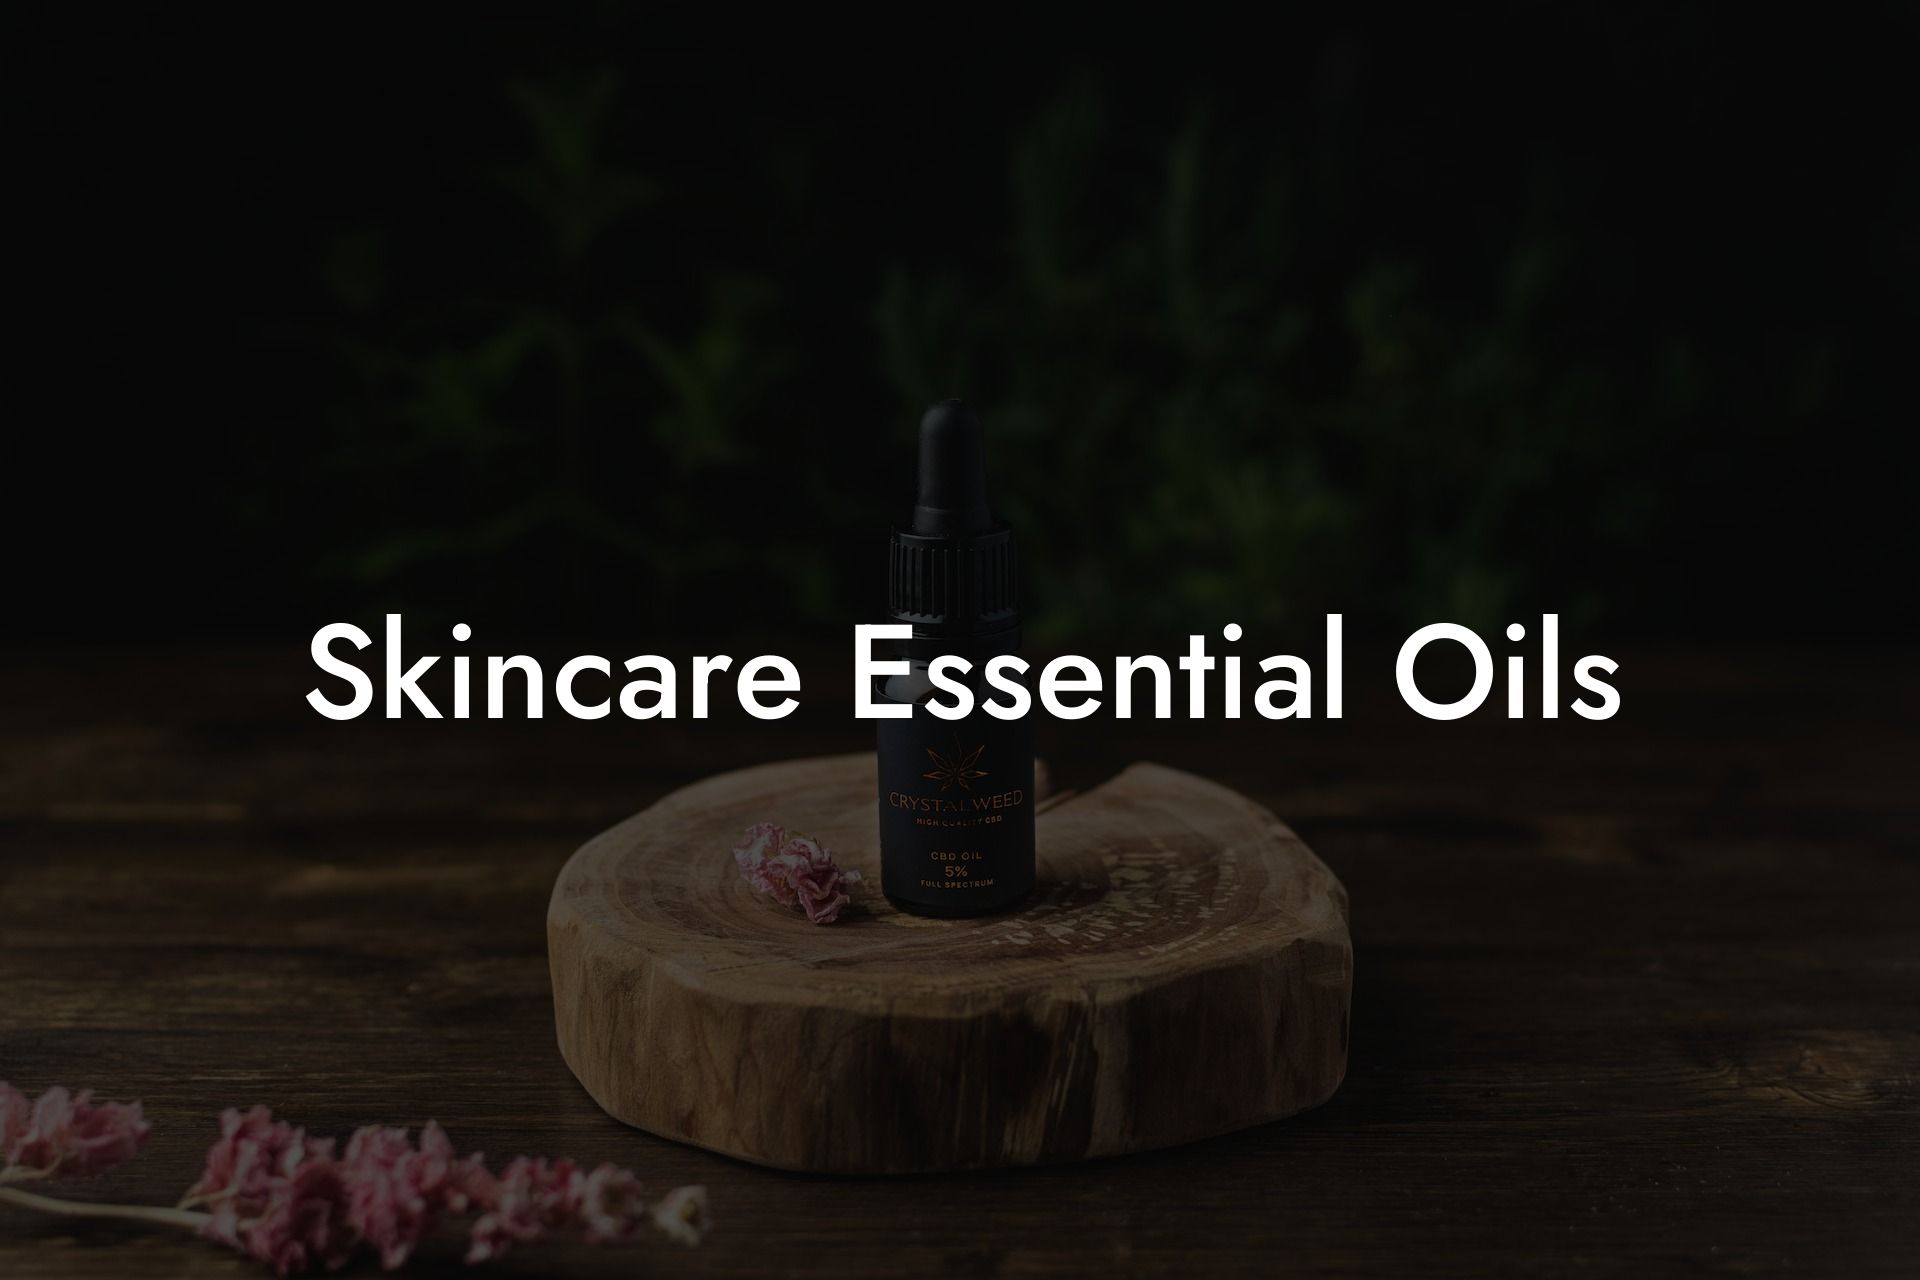 Skincare Essential Oils